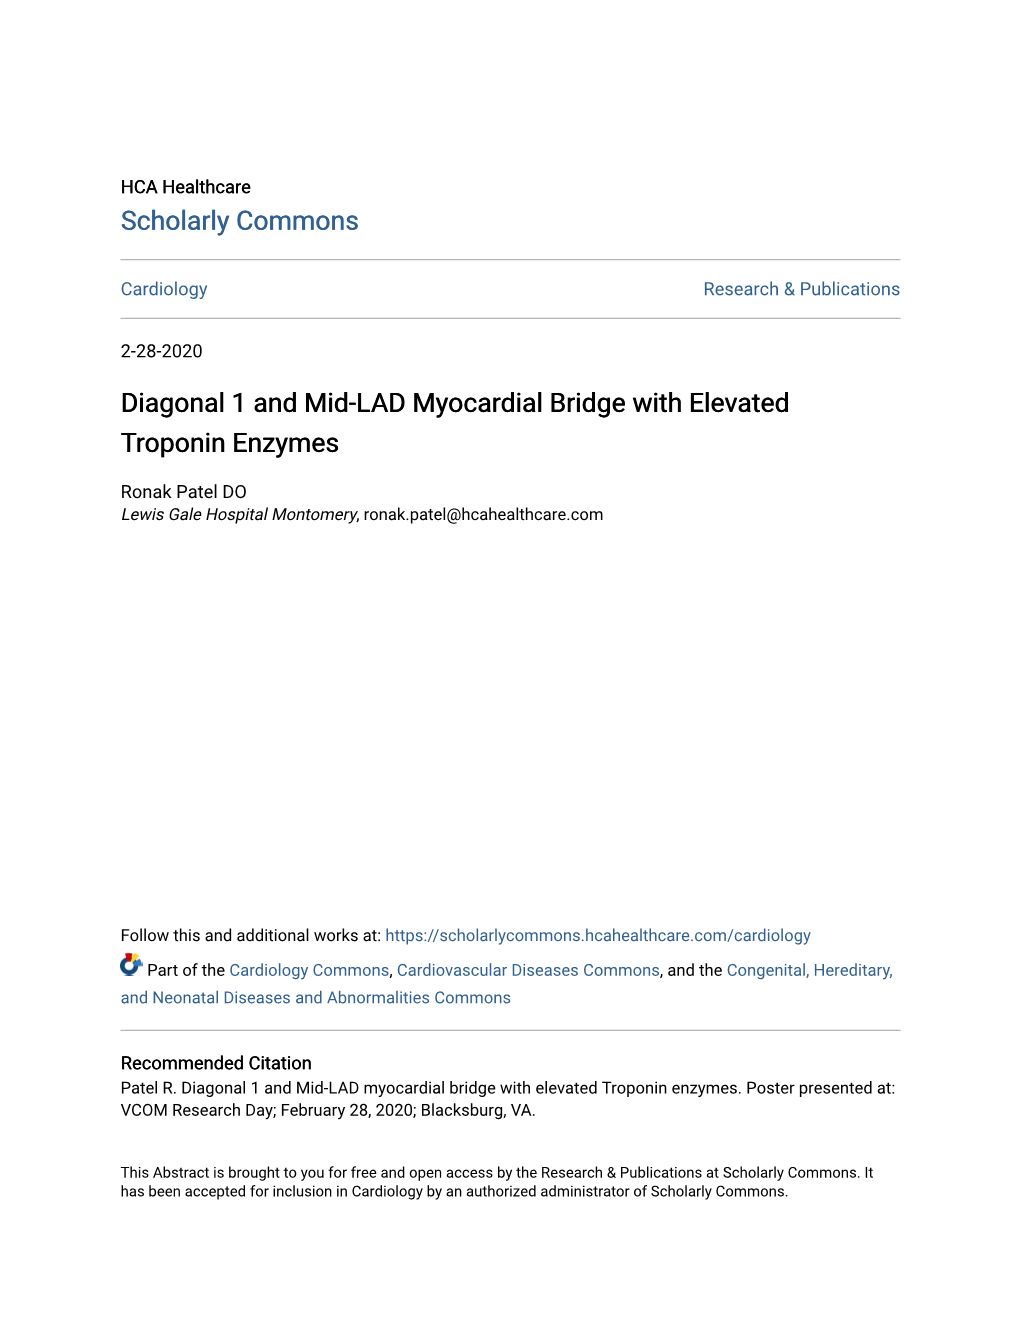 Diagonal 1 and Mid-LAD Myocardial Bridge with Elevated Troponin Enzymes